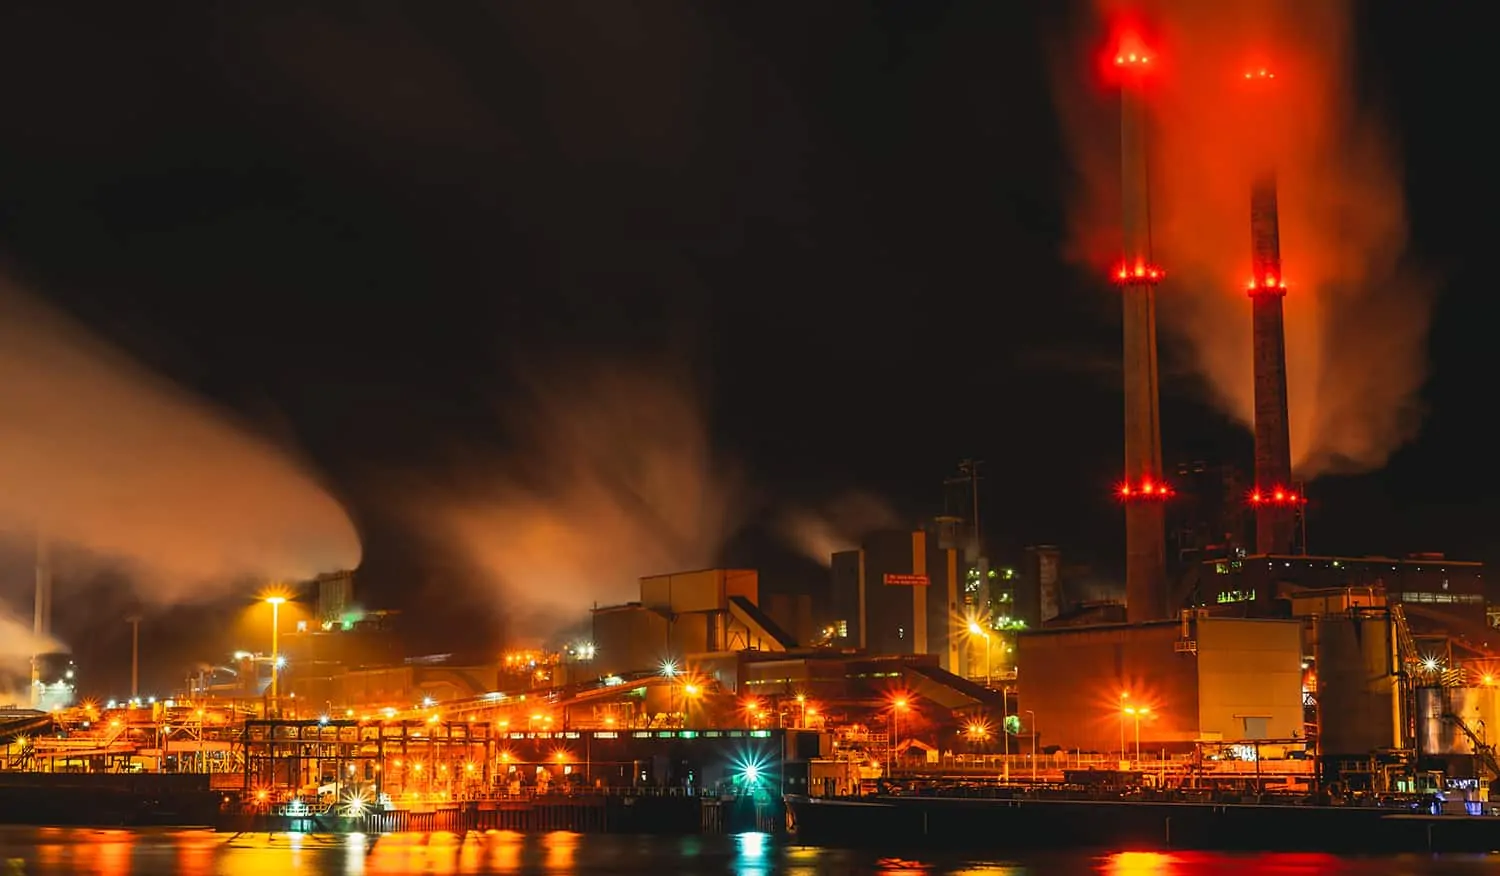 Image of natural gas plant at night